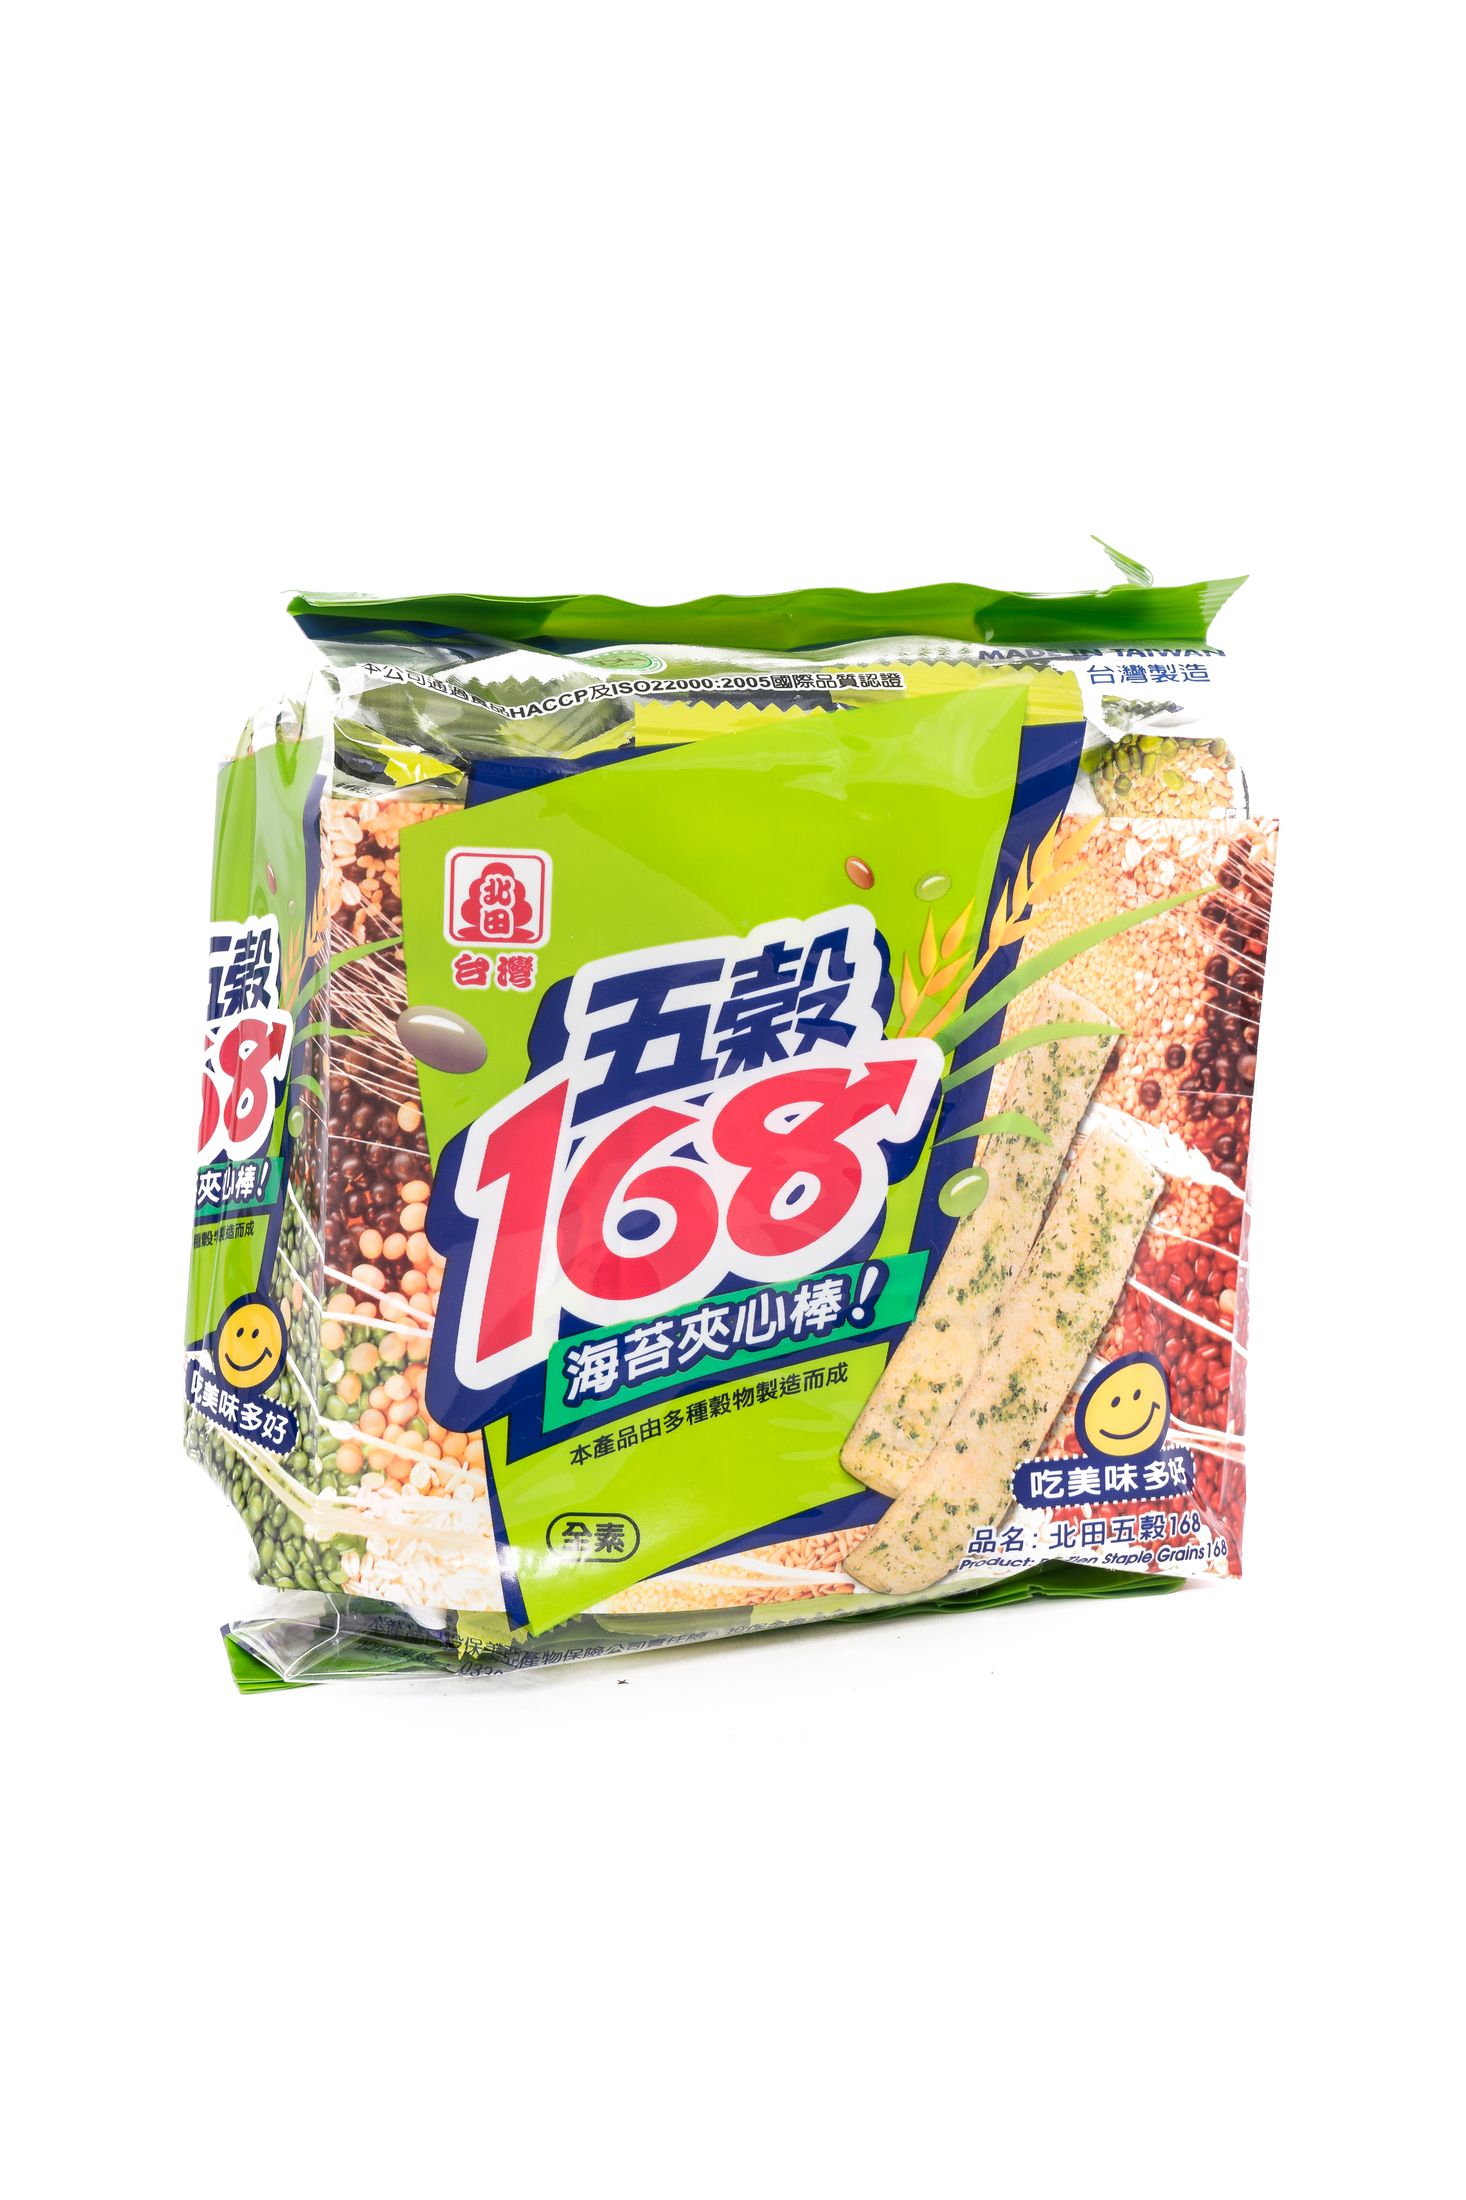 Pei Tien Grain bar 168